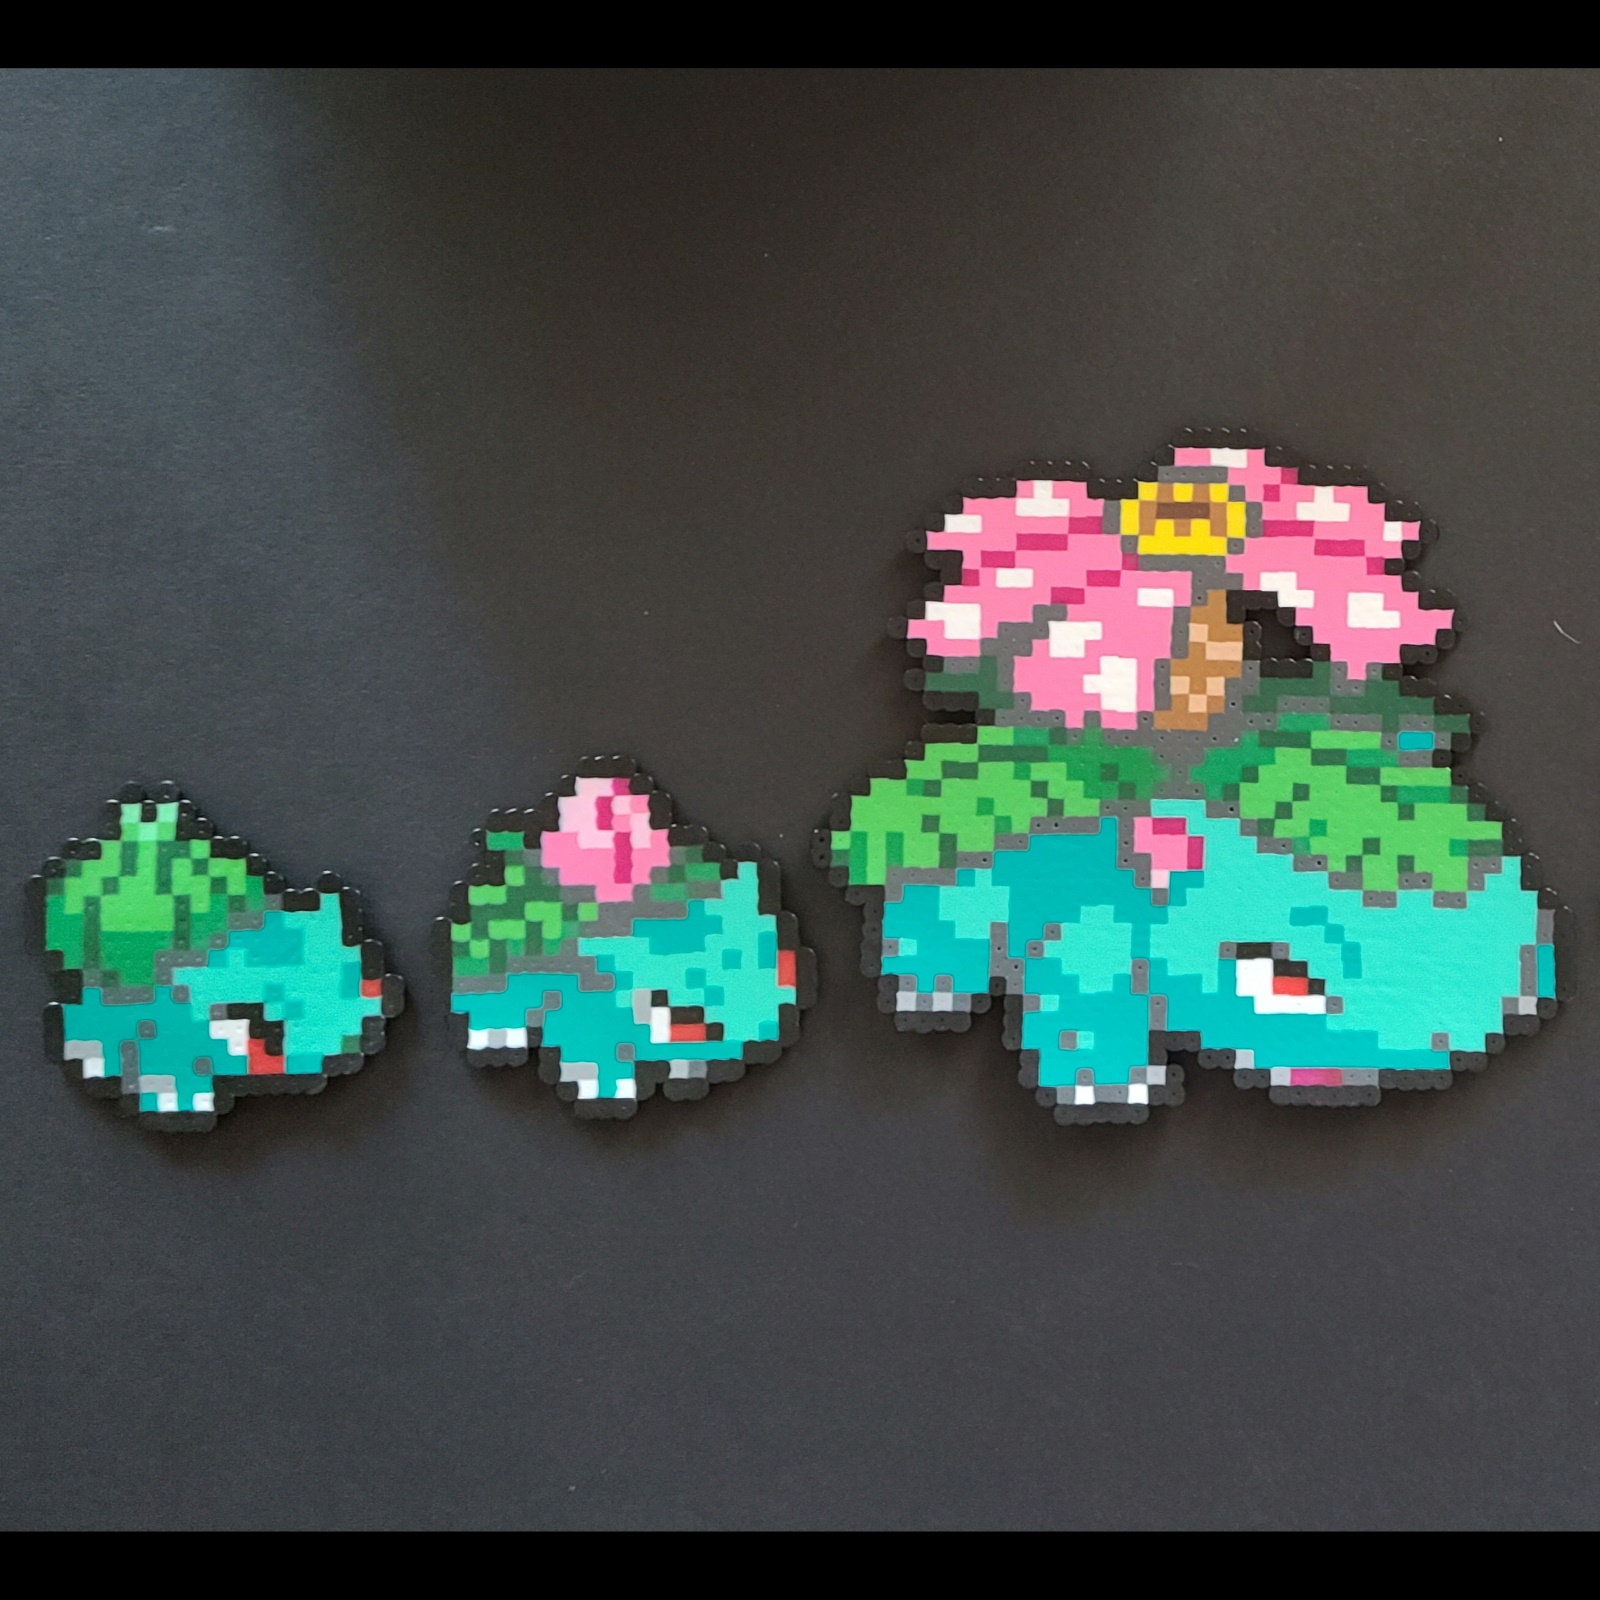 4 Seasons Bulbasaurs made with iron beads : r/pokemon